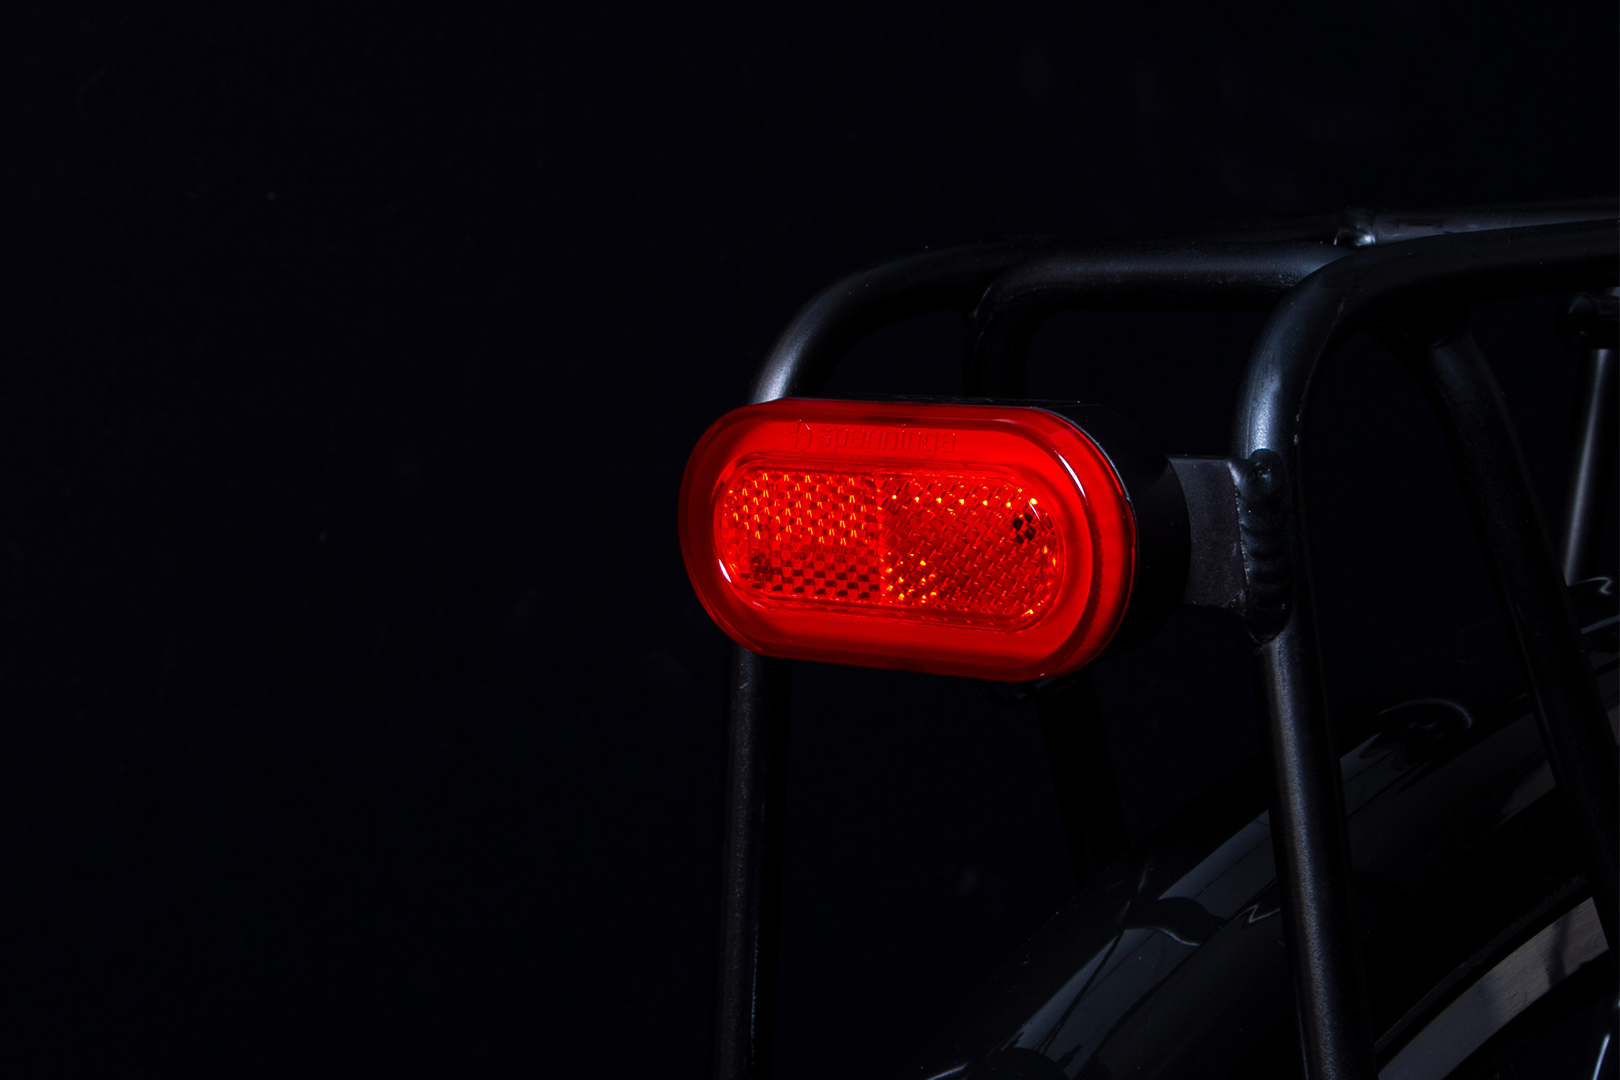 Halo rear light image